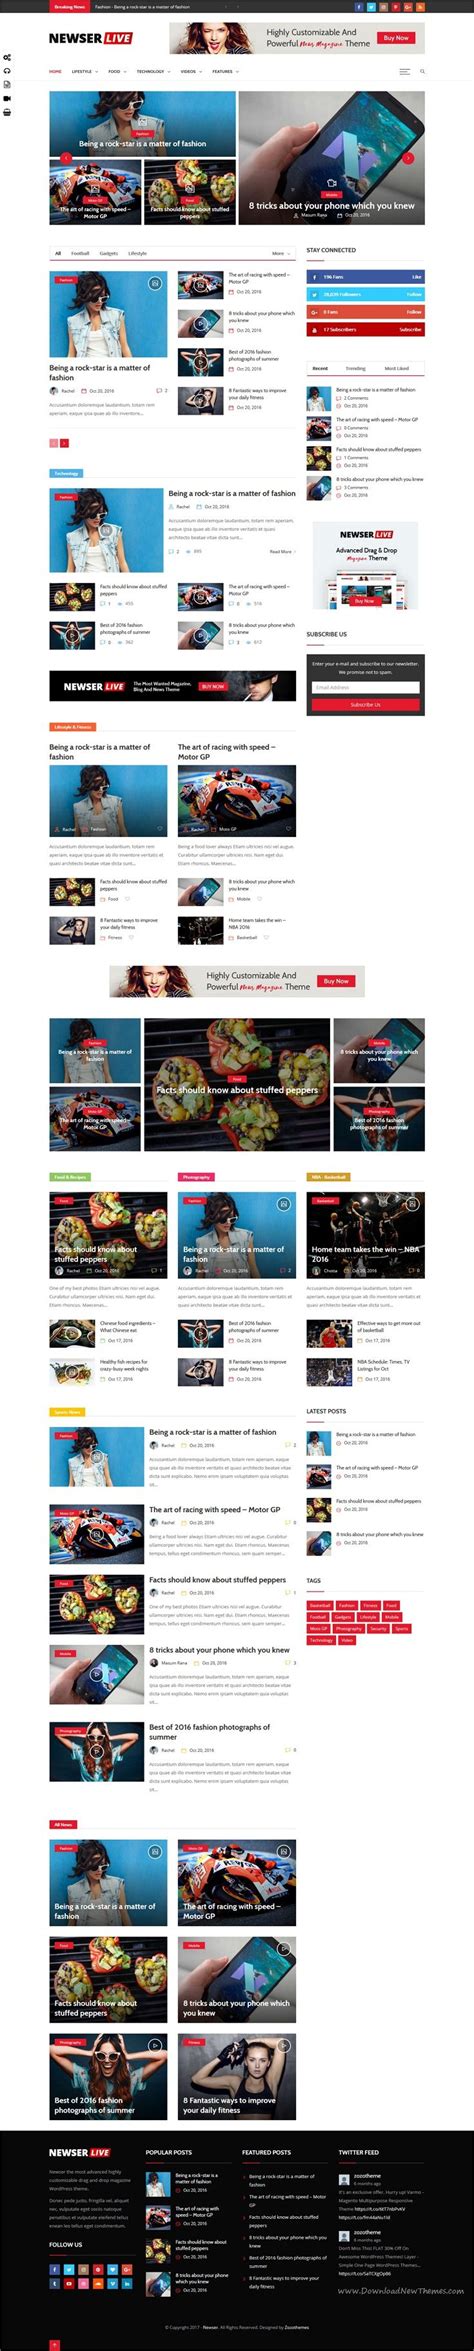 Newser Newspaper Magazine WordPress Theme Magazine Website Design